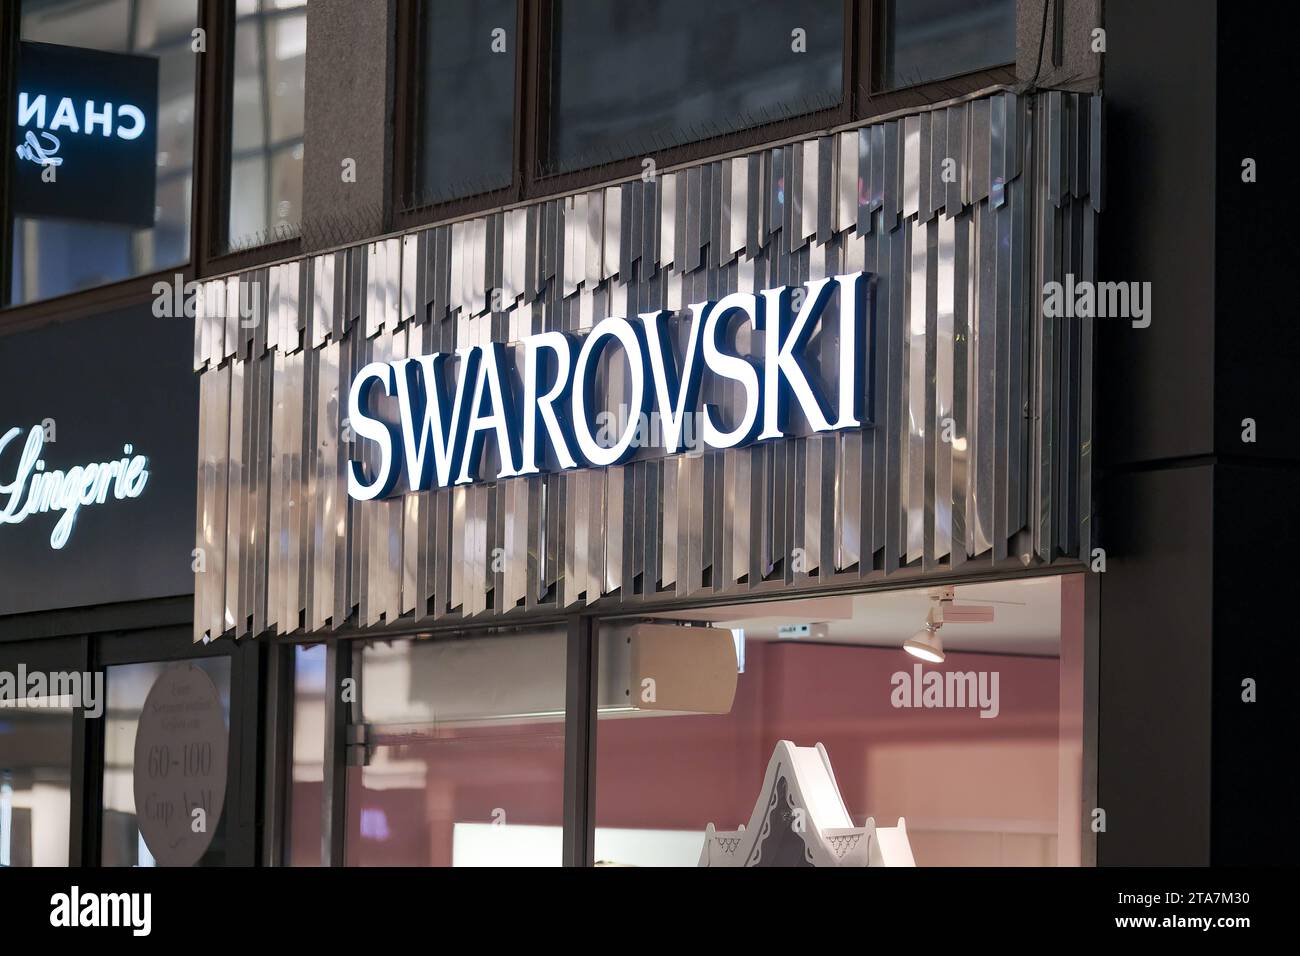 Swarovski dusseldorf hi-res stock photography and images - Alamy